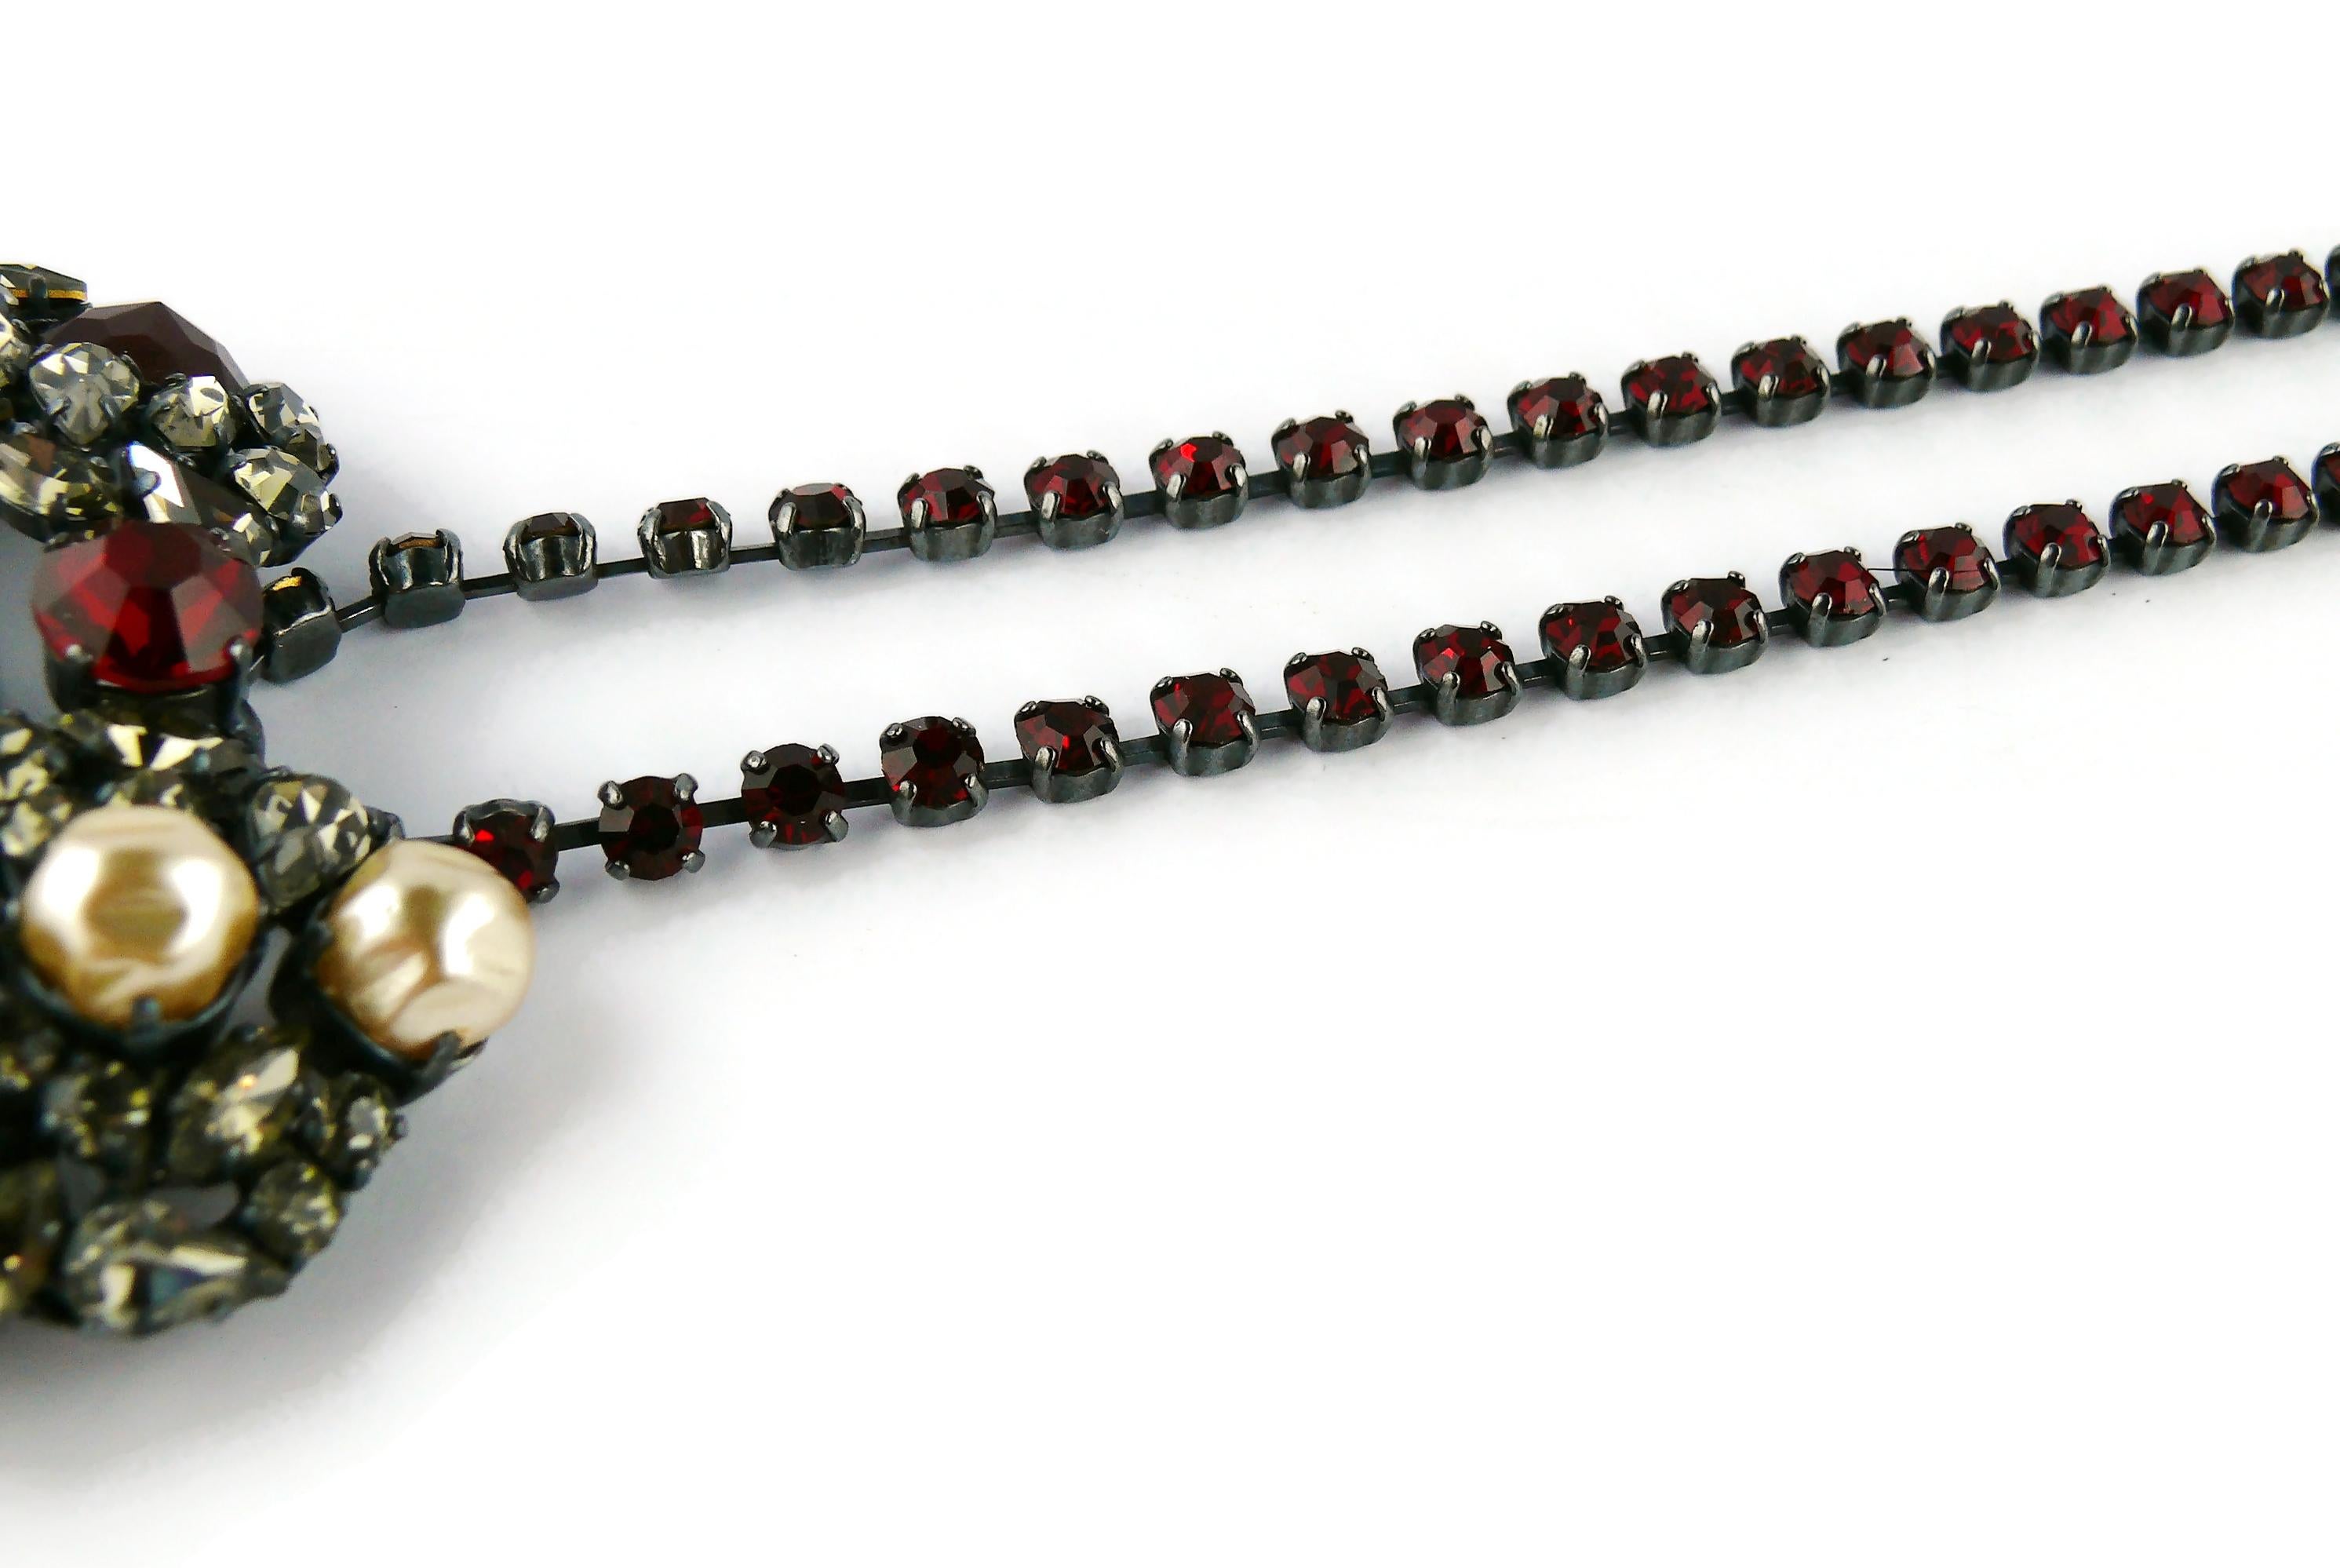 Yves Saint Laurent Vintage Massive Iconic Bejeweled Heart Brooch Necklace 7